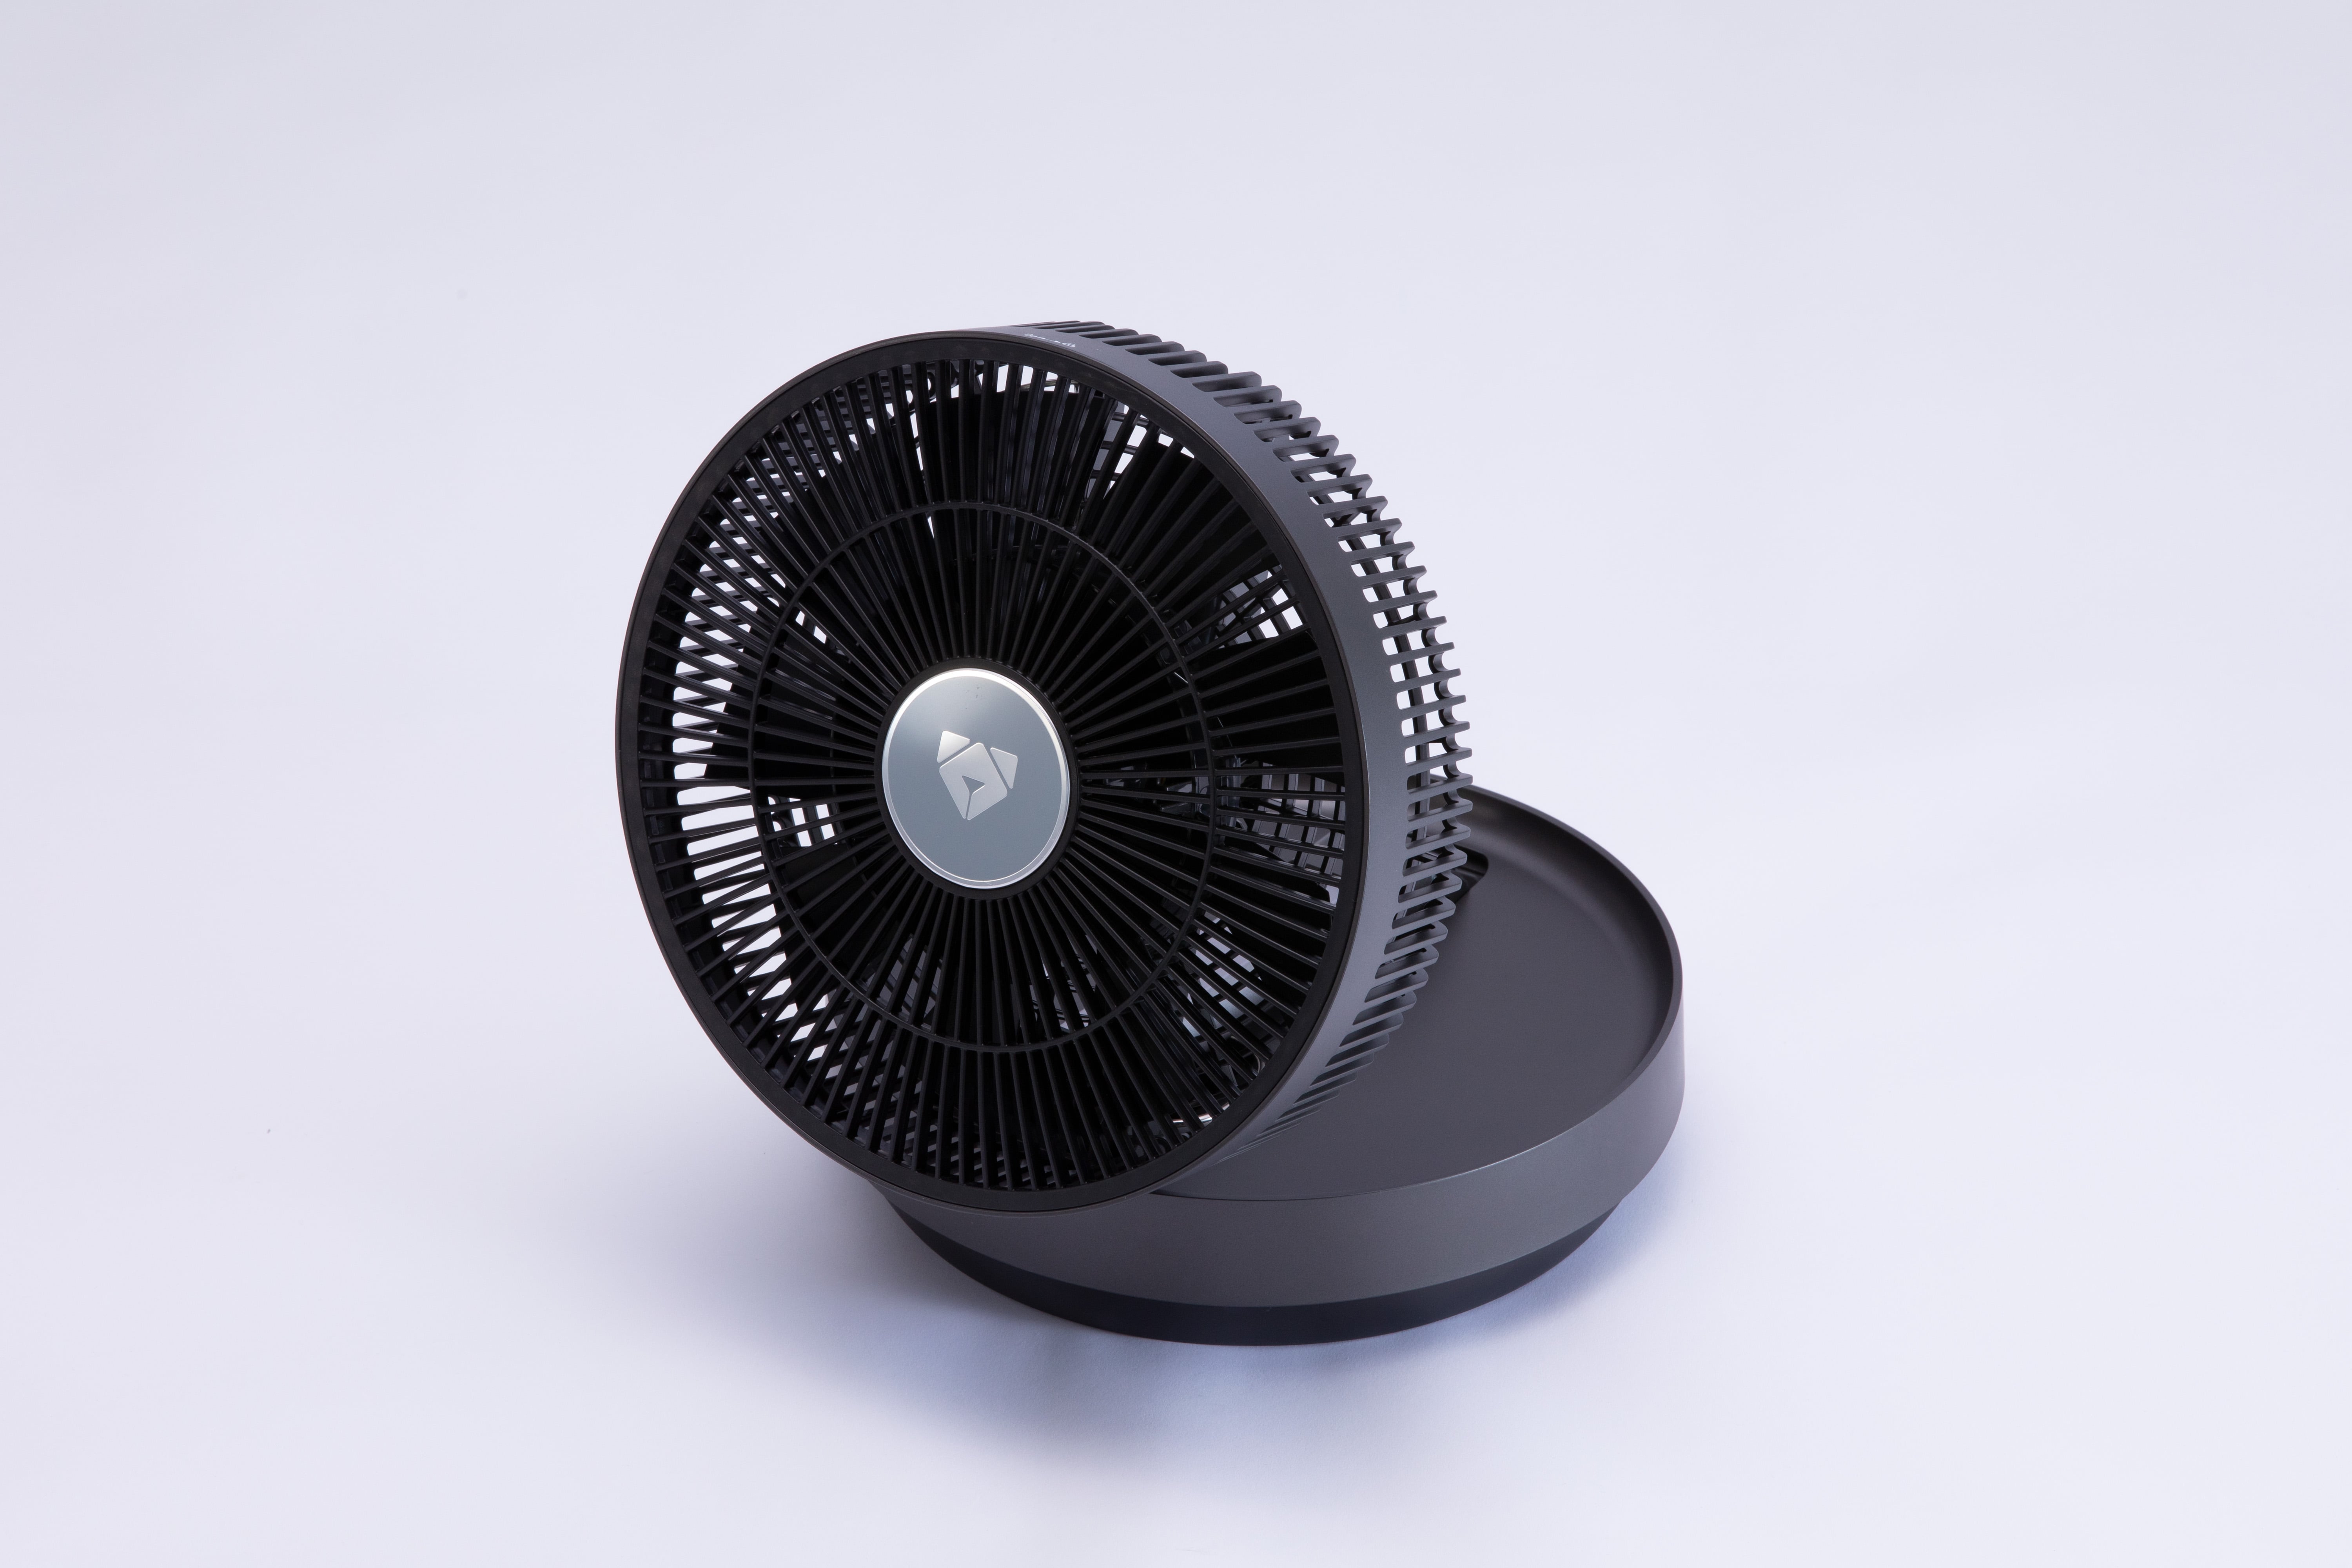 Airdog The Fan portable（ｻｰｷｭﾚｰﾀｰ扇風機）｜ﾏｯﾄﾌﾞﾗｯｸ：toConnect 